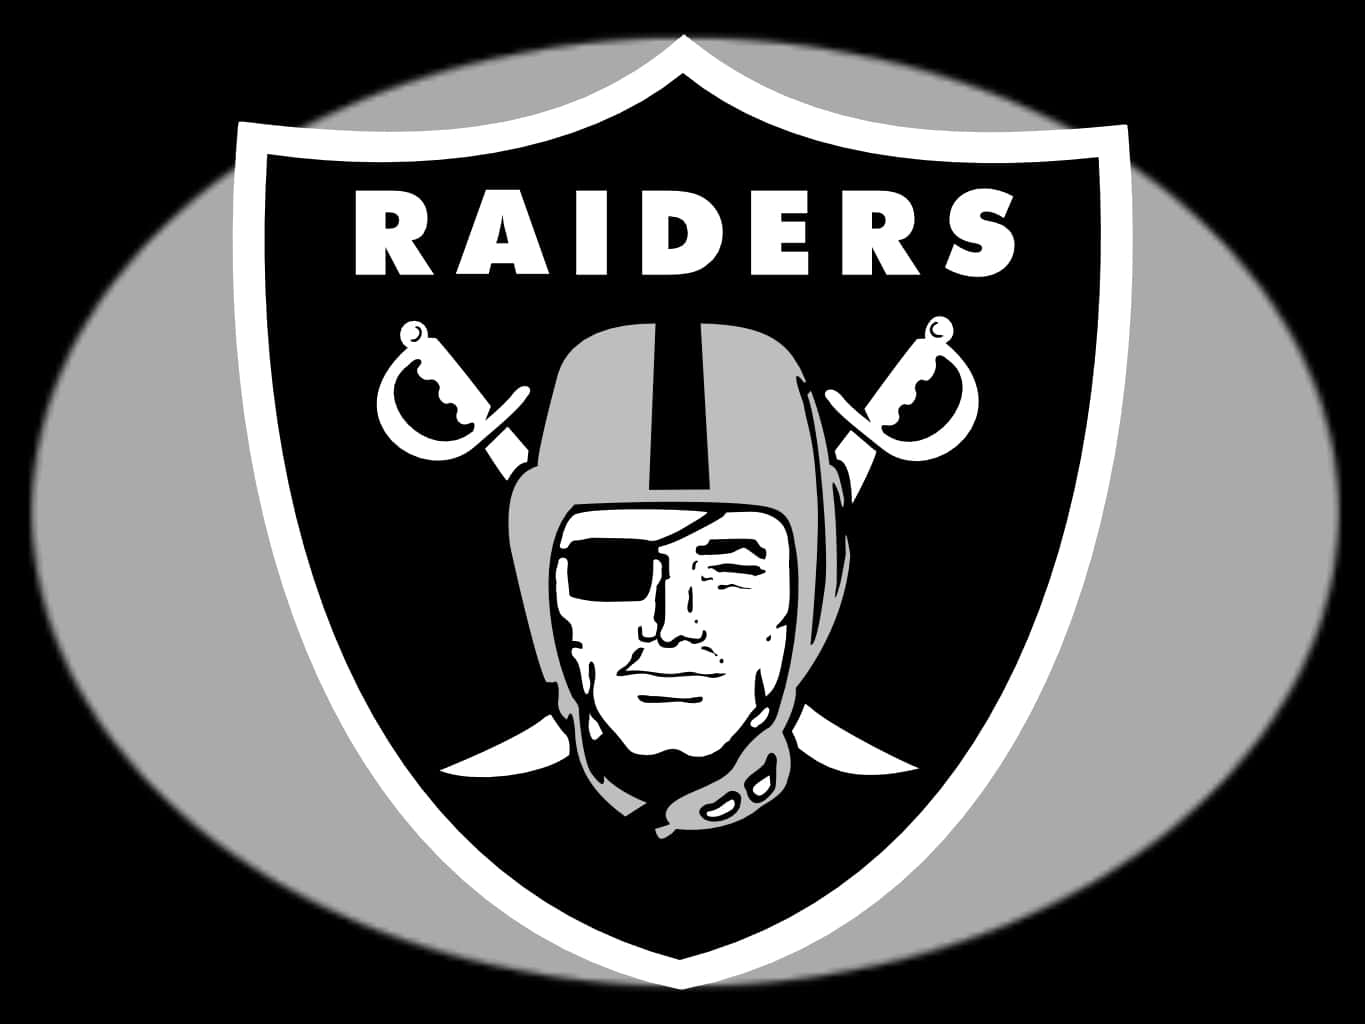 Raiders Team Logo Wallpaper